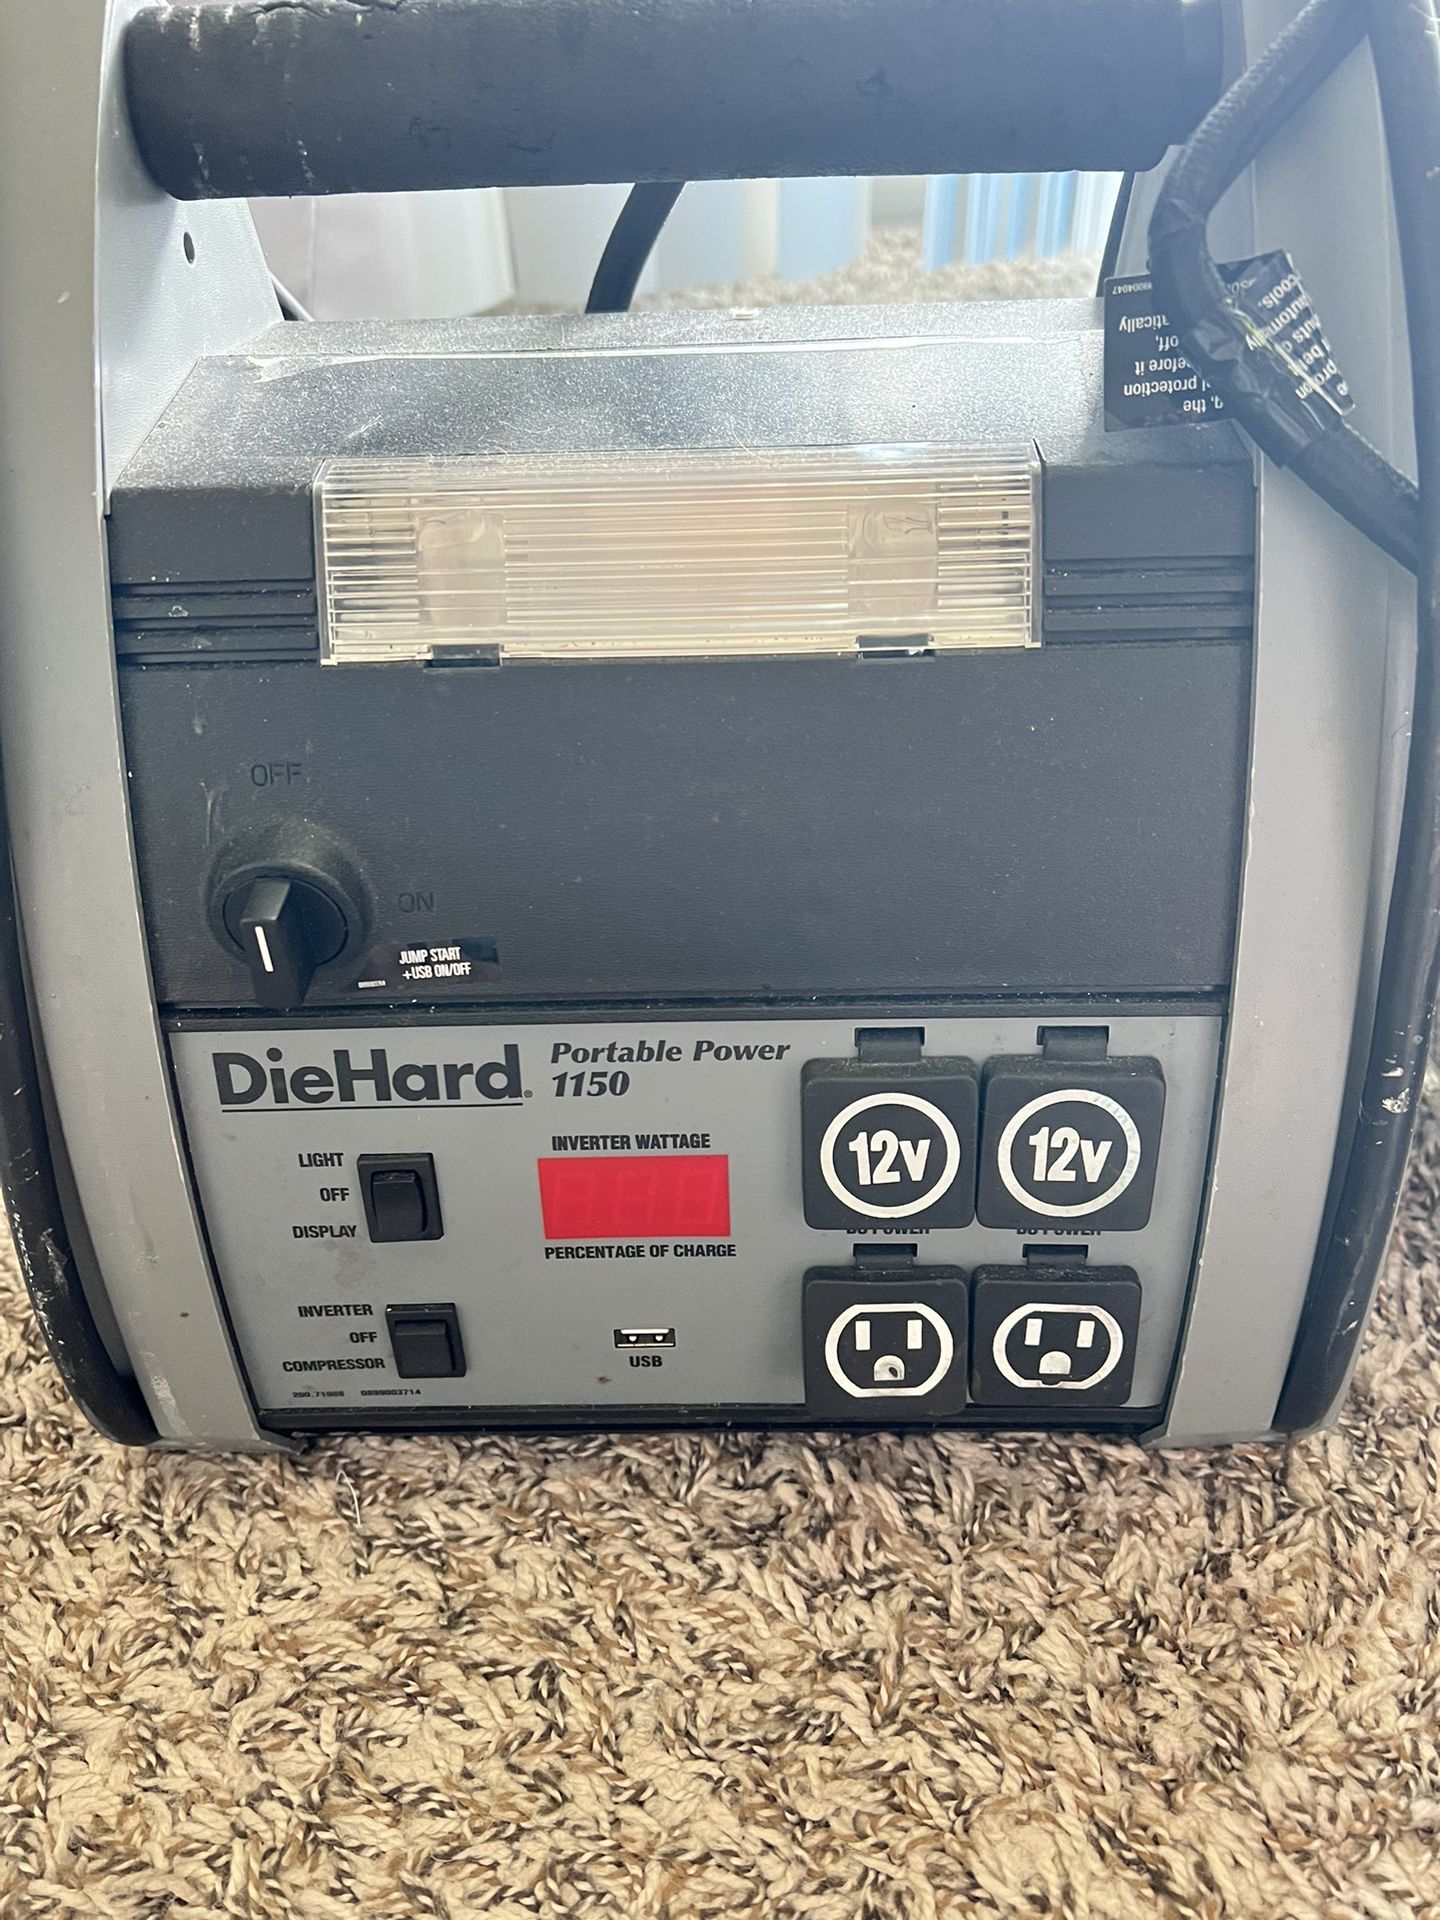 DieHard • Portable Power 1150